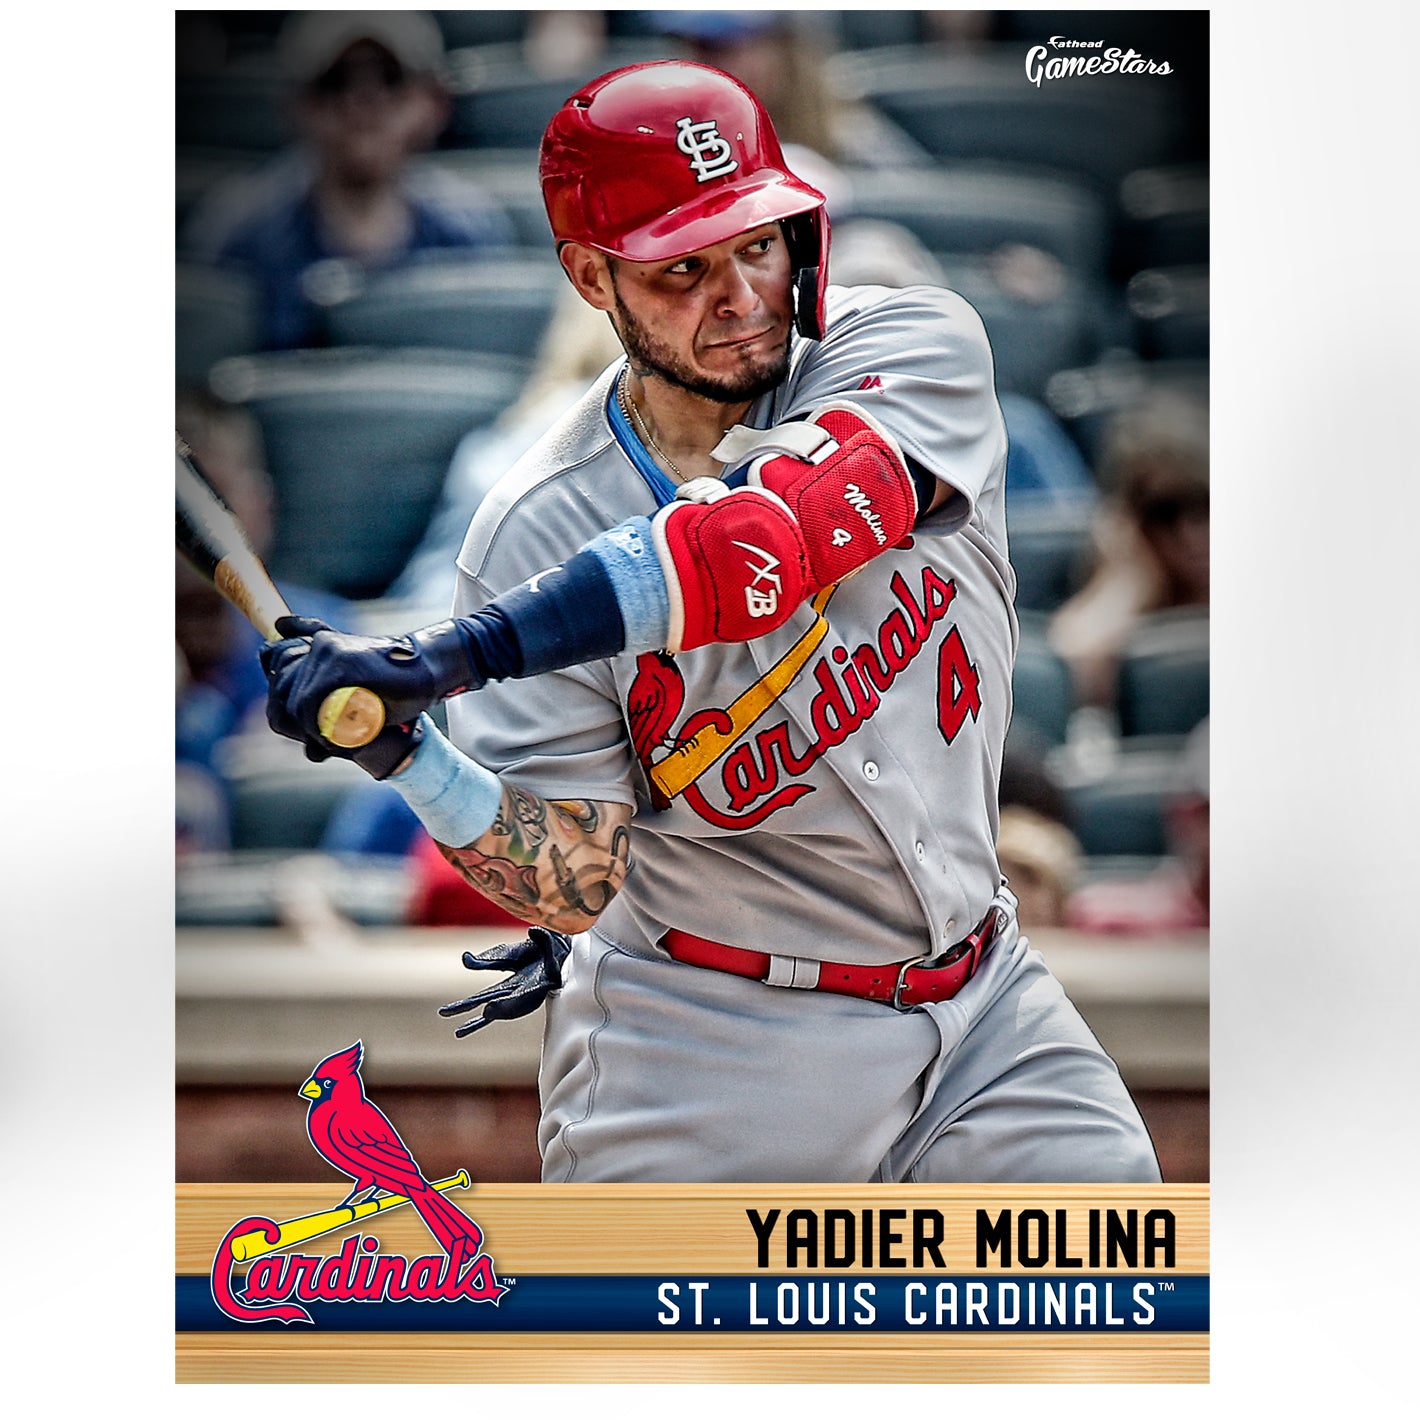 Player Baseball St. Louis Cardinals Yadiermolina Yadier Molina